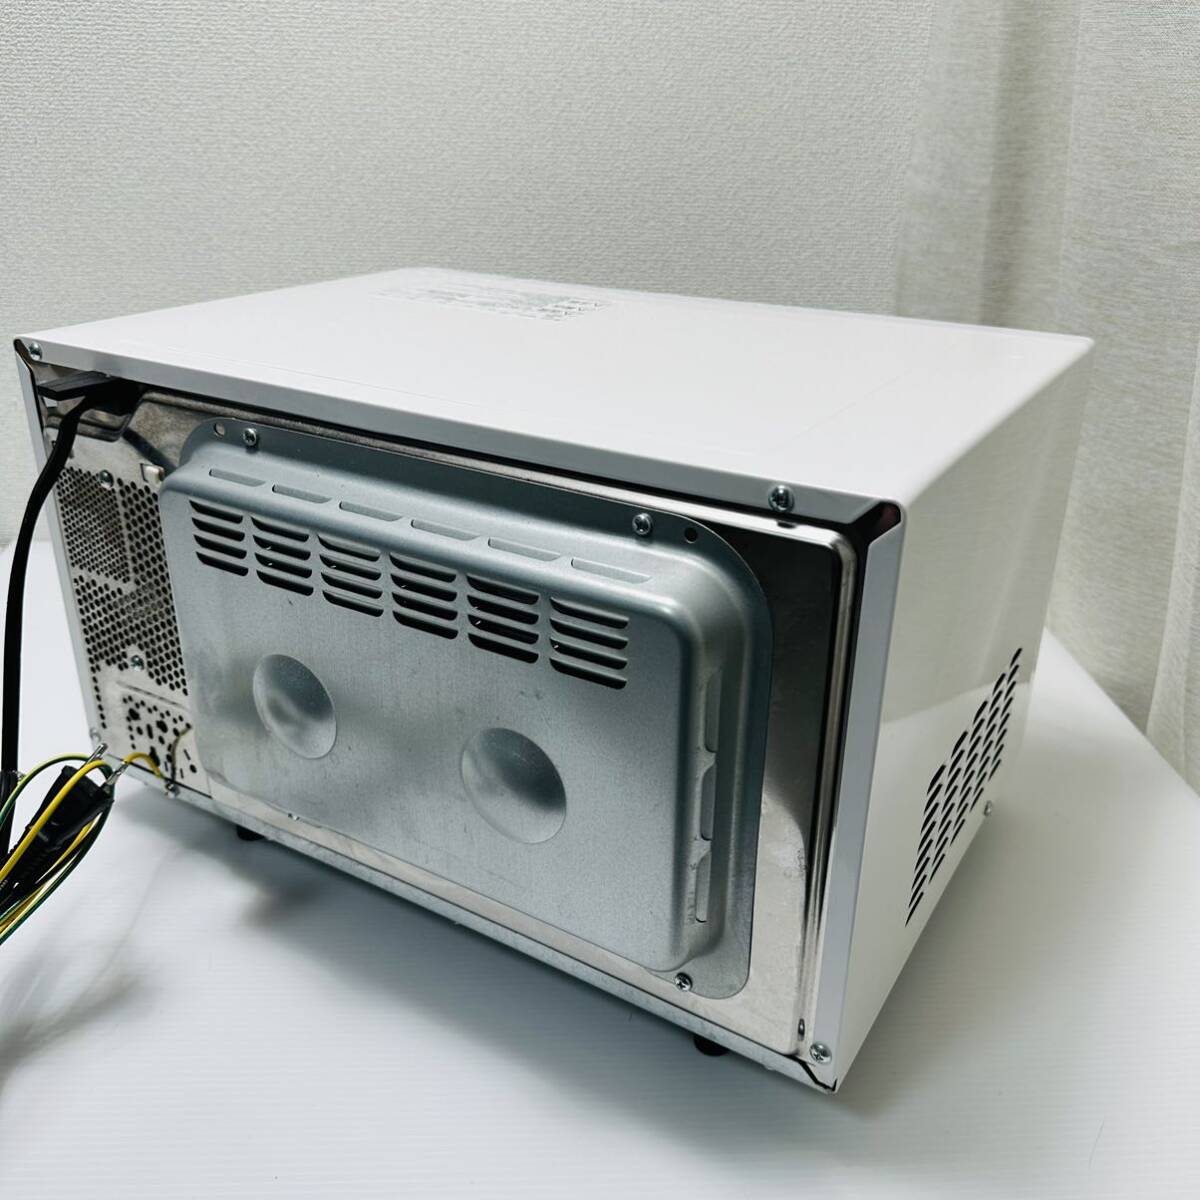  Iris o-yamaIRIS OHYAMA microwave oven MO-F1805-W